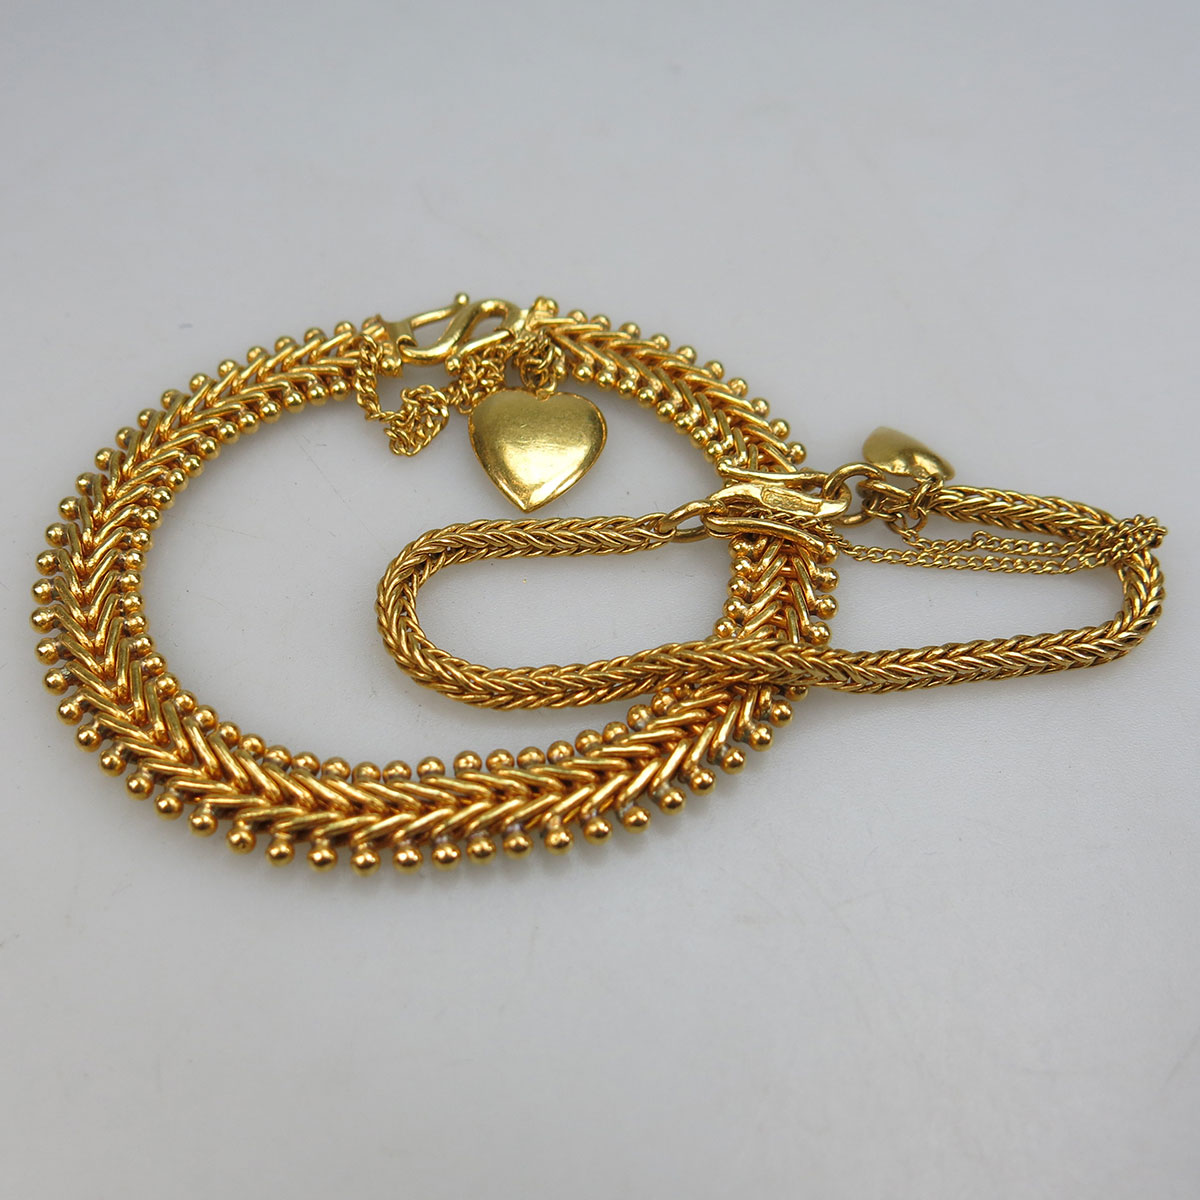 2 High Carat Yellow Gold Bracelets